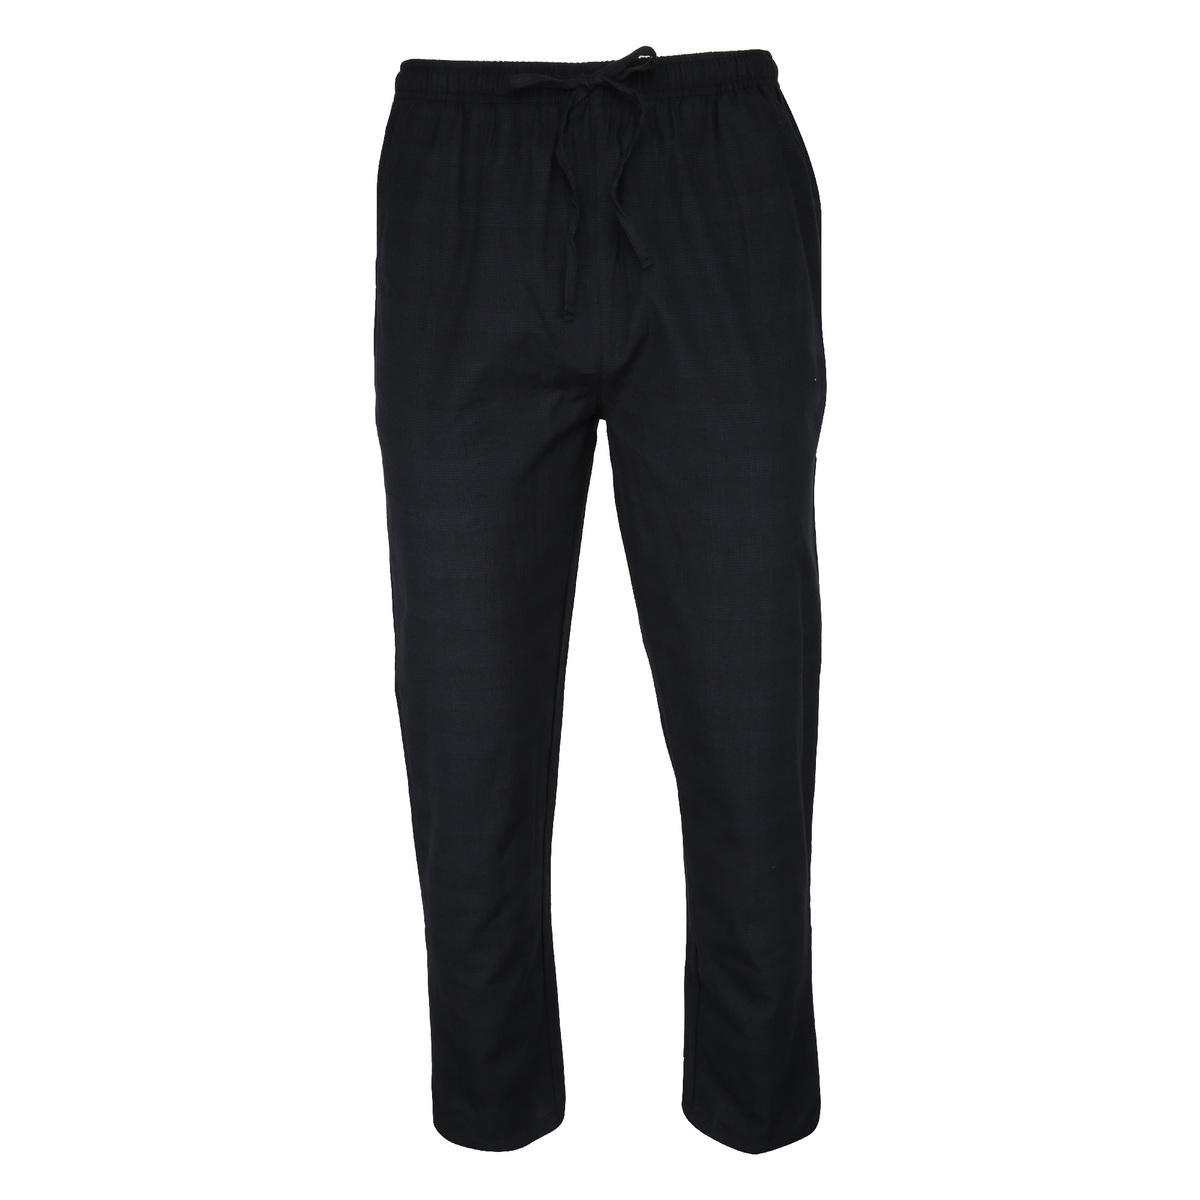 Elite Comfort Men's Woven Night Pants EM04 Black, XX-Large